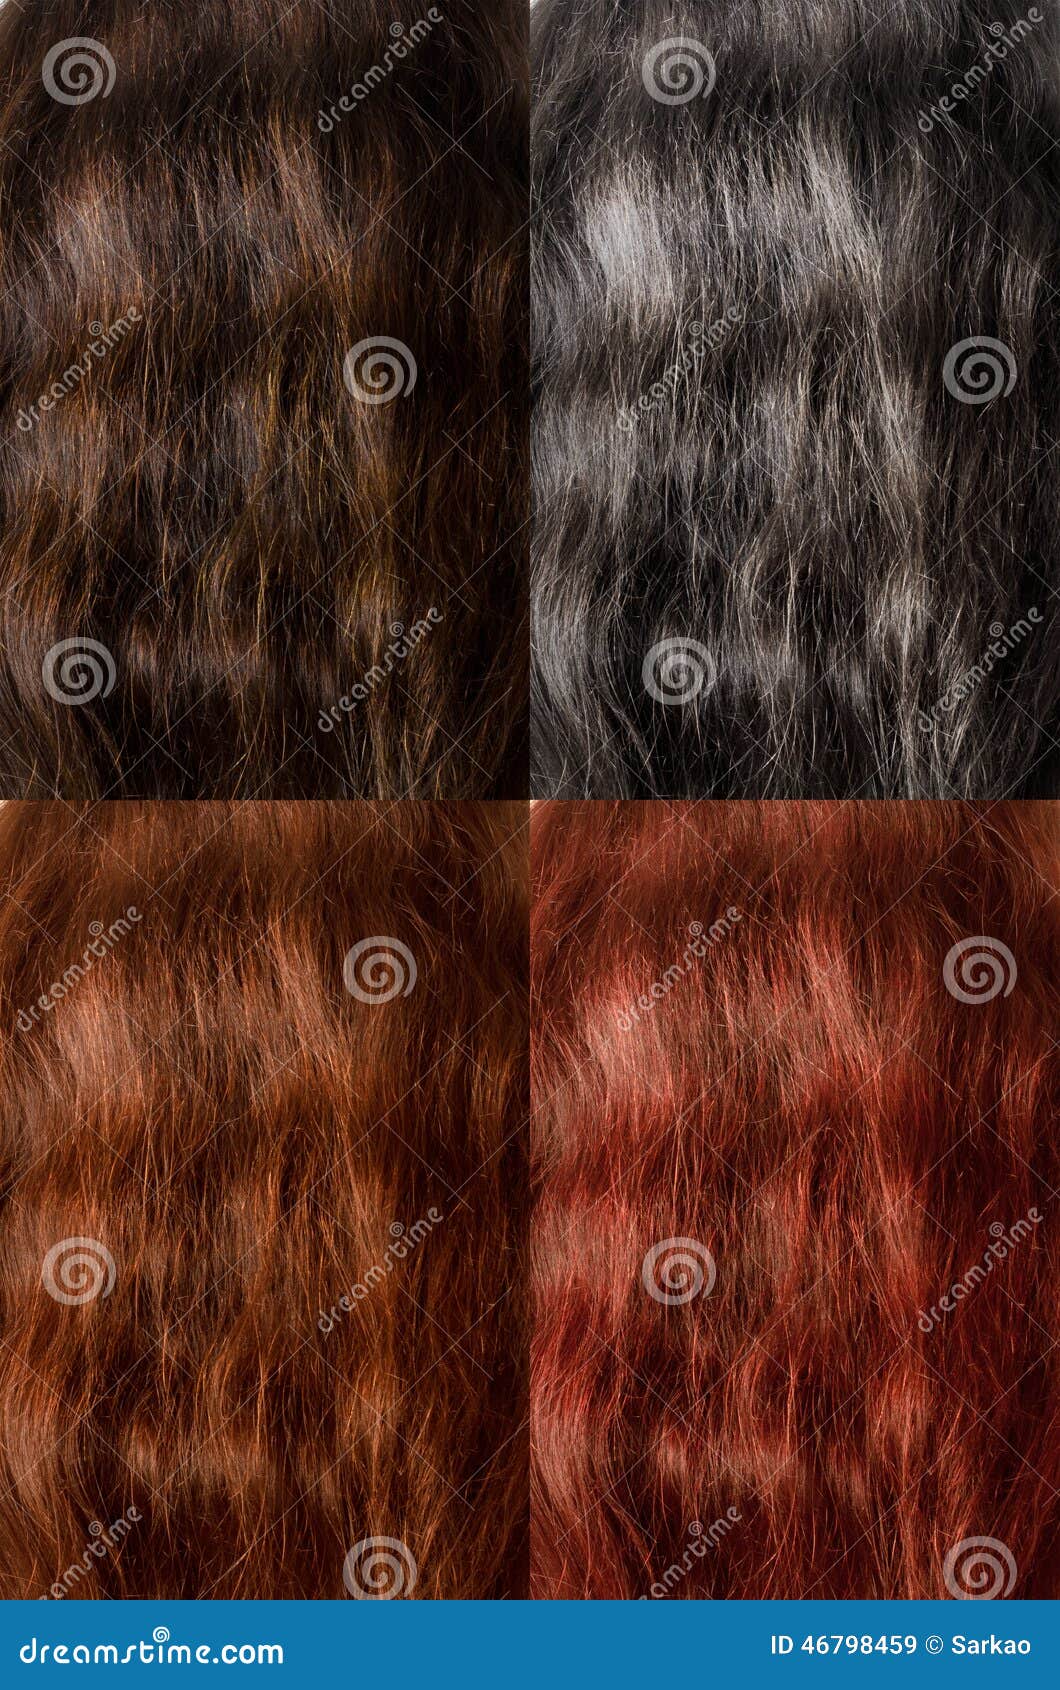 Hair colors stock image. Image of brown, dark, black - 46798459